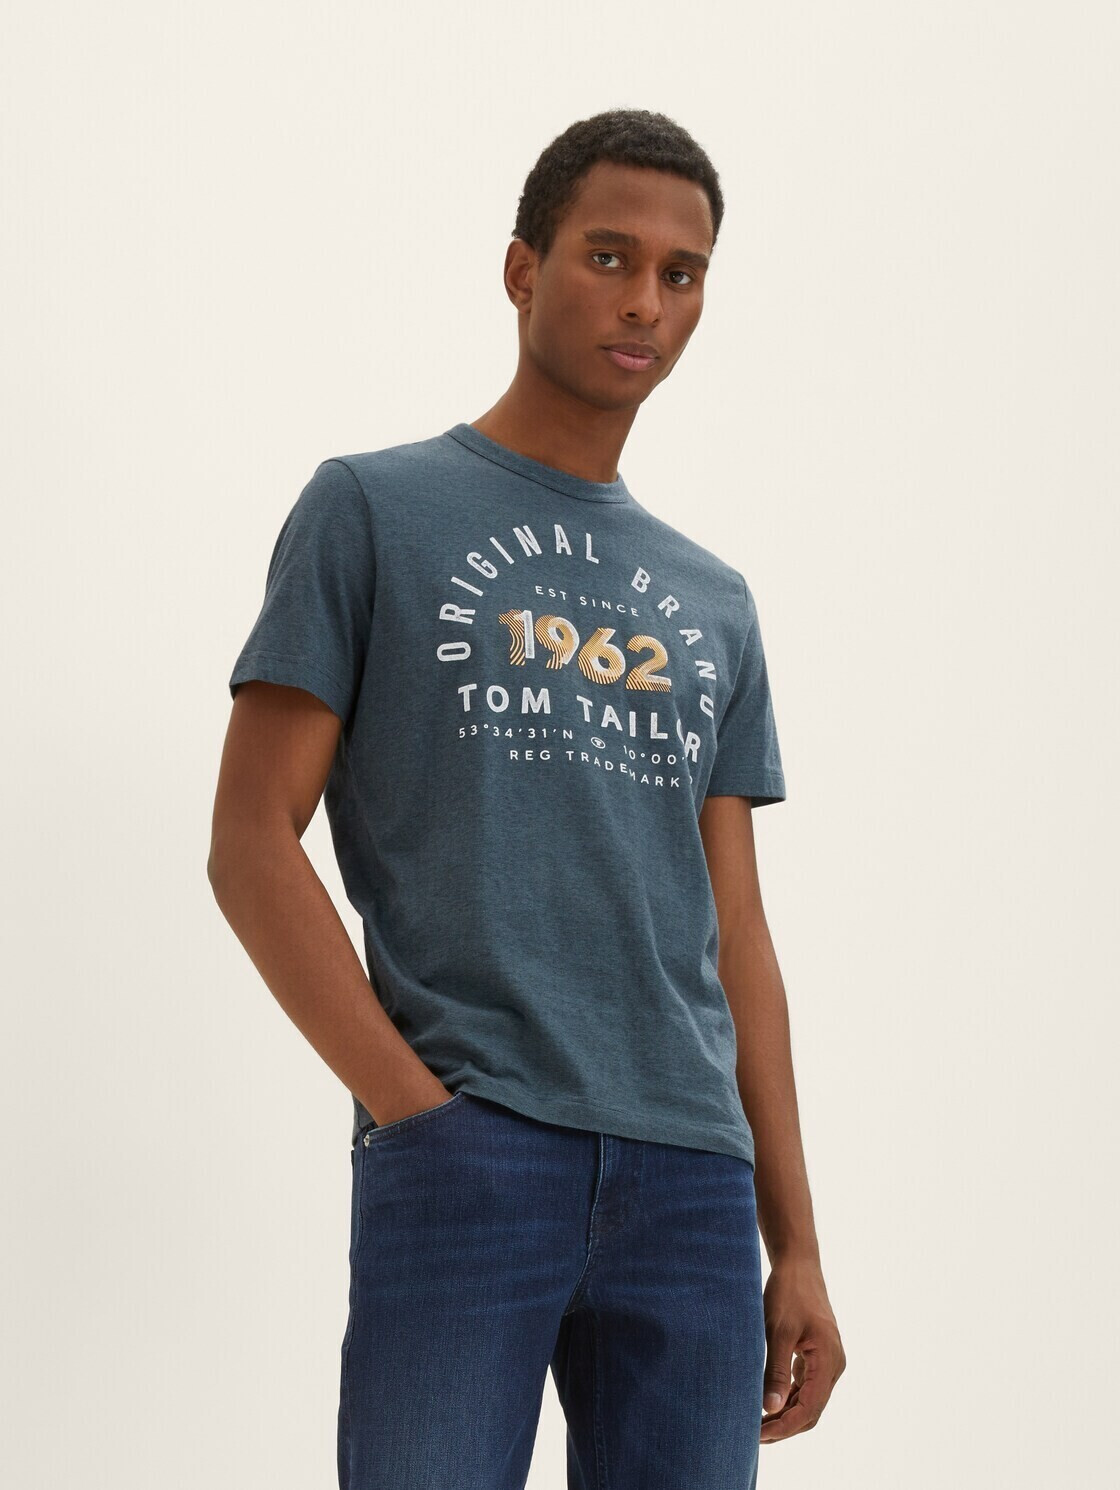 Tom mit 15,99 blau T-Shirt Print bei Preisvergleich | (1035549) € ab Tailor